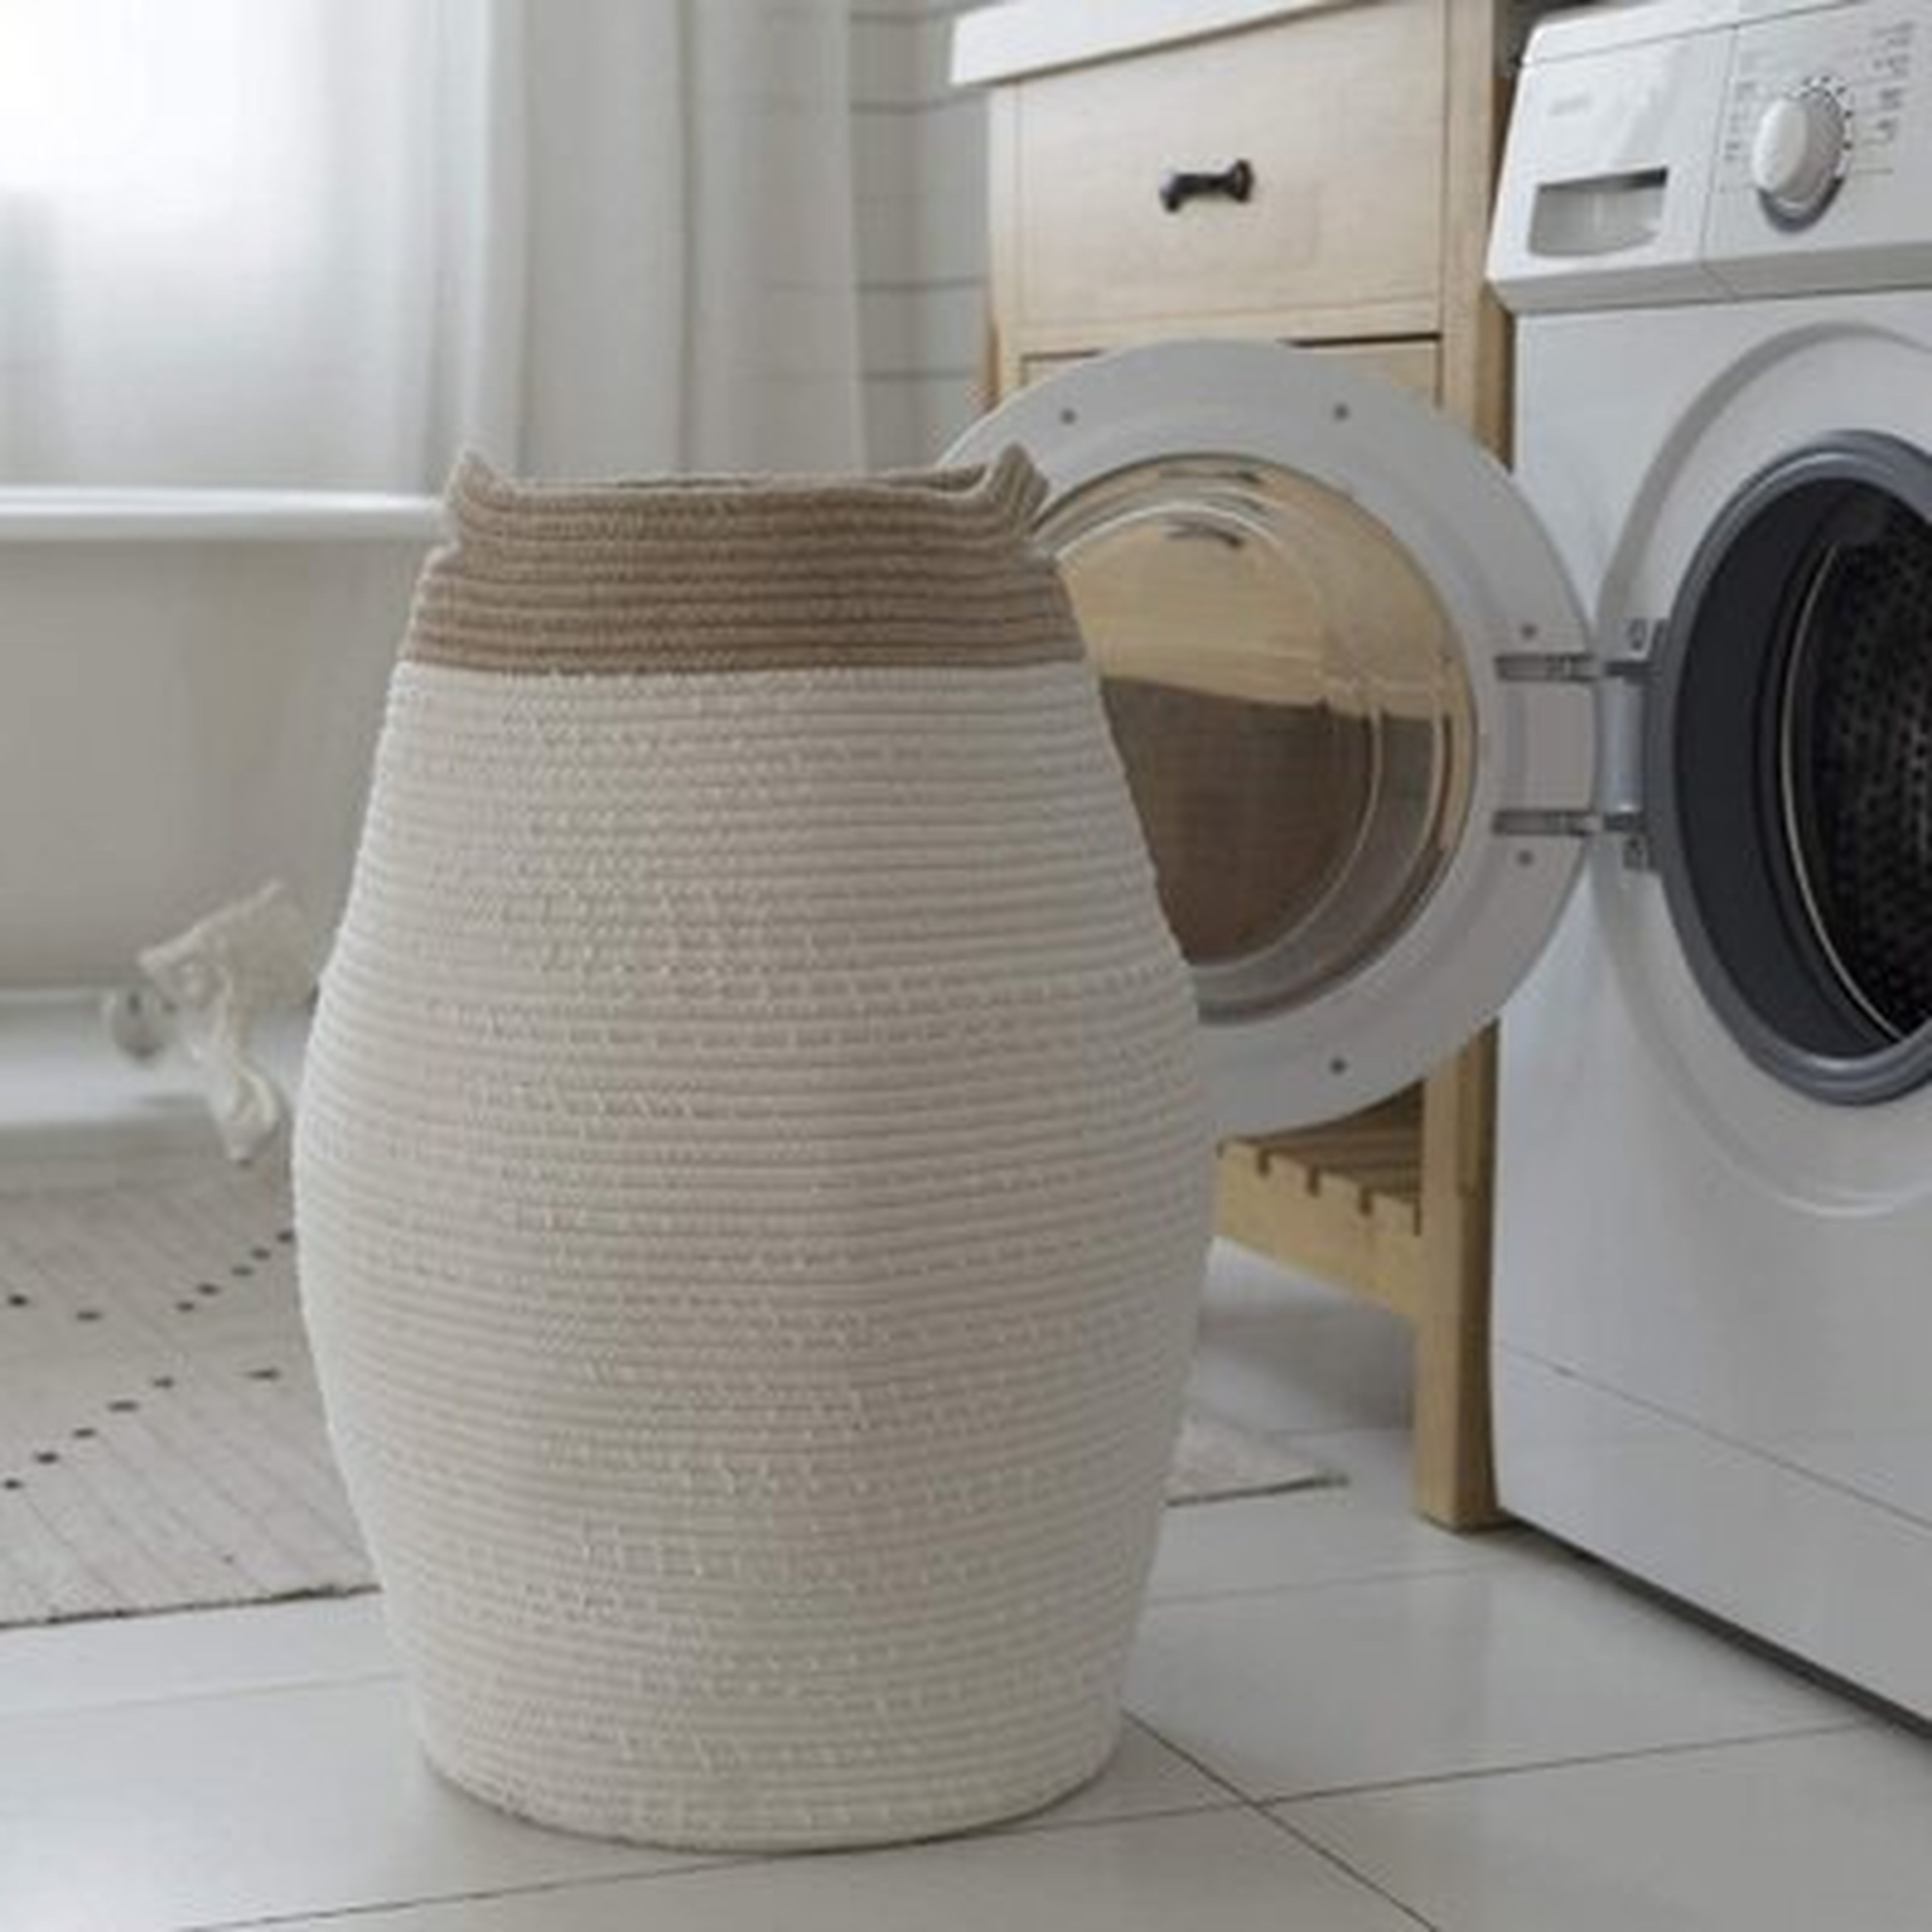 Jumbo Laundry Hamper 24 Inch, Tall Cotton Rope Woven Basket Hamper For Laundry Clothes Bathroom, White & Linen - Wayfair